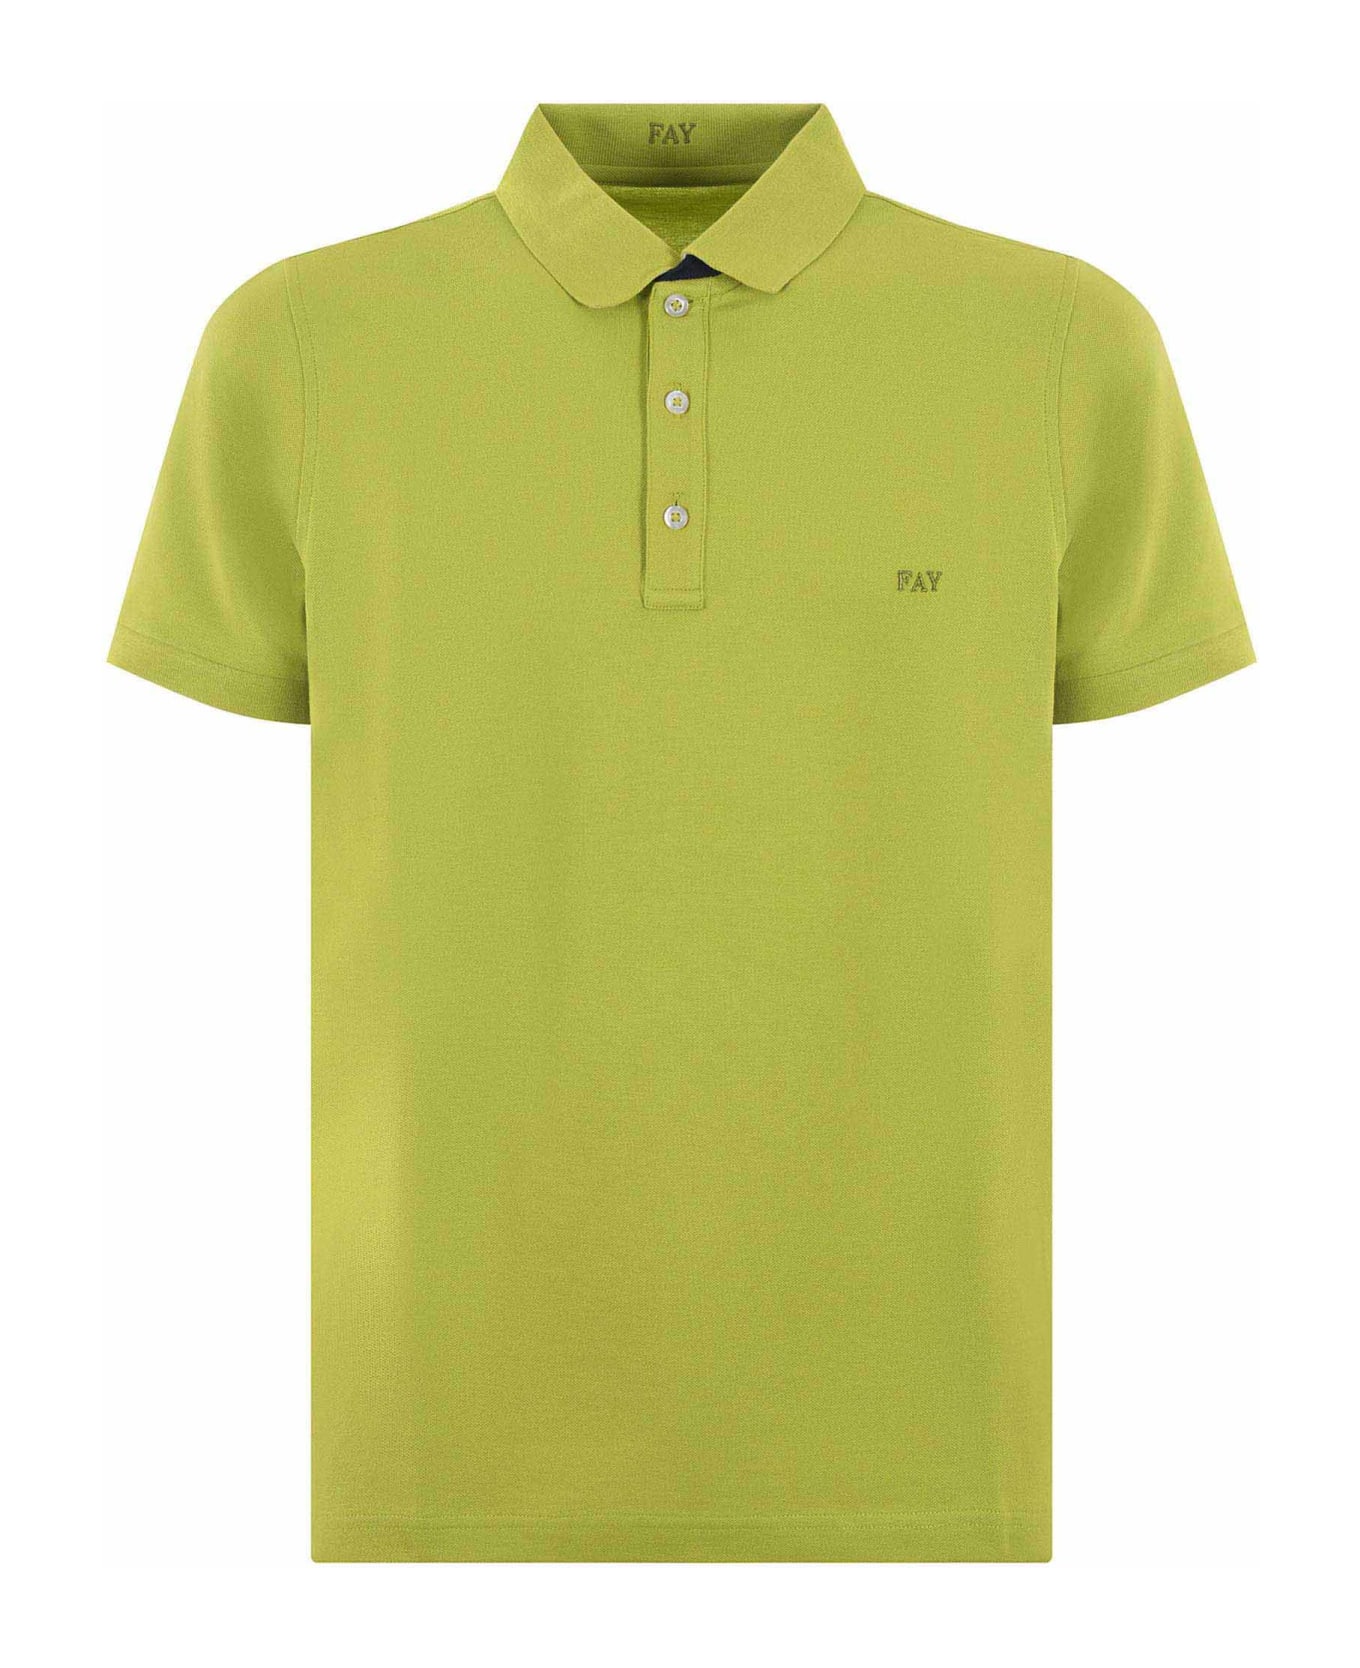 Fay Yellow Polo - Green ポロシャツ